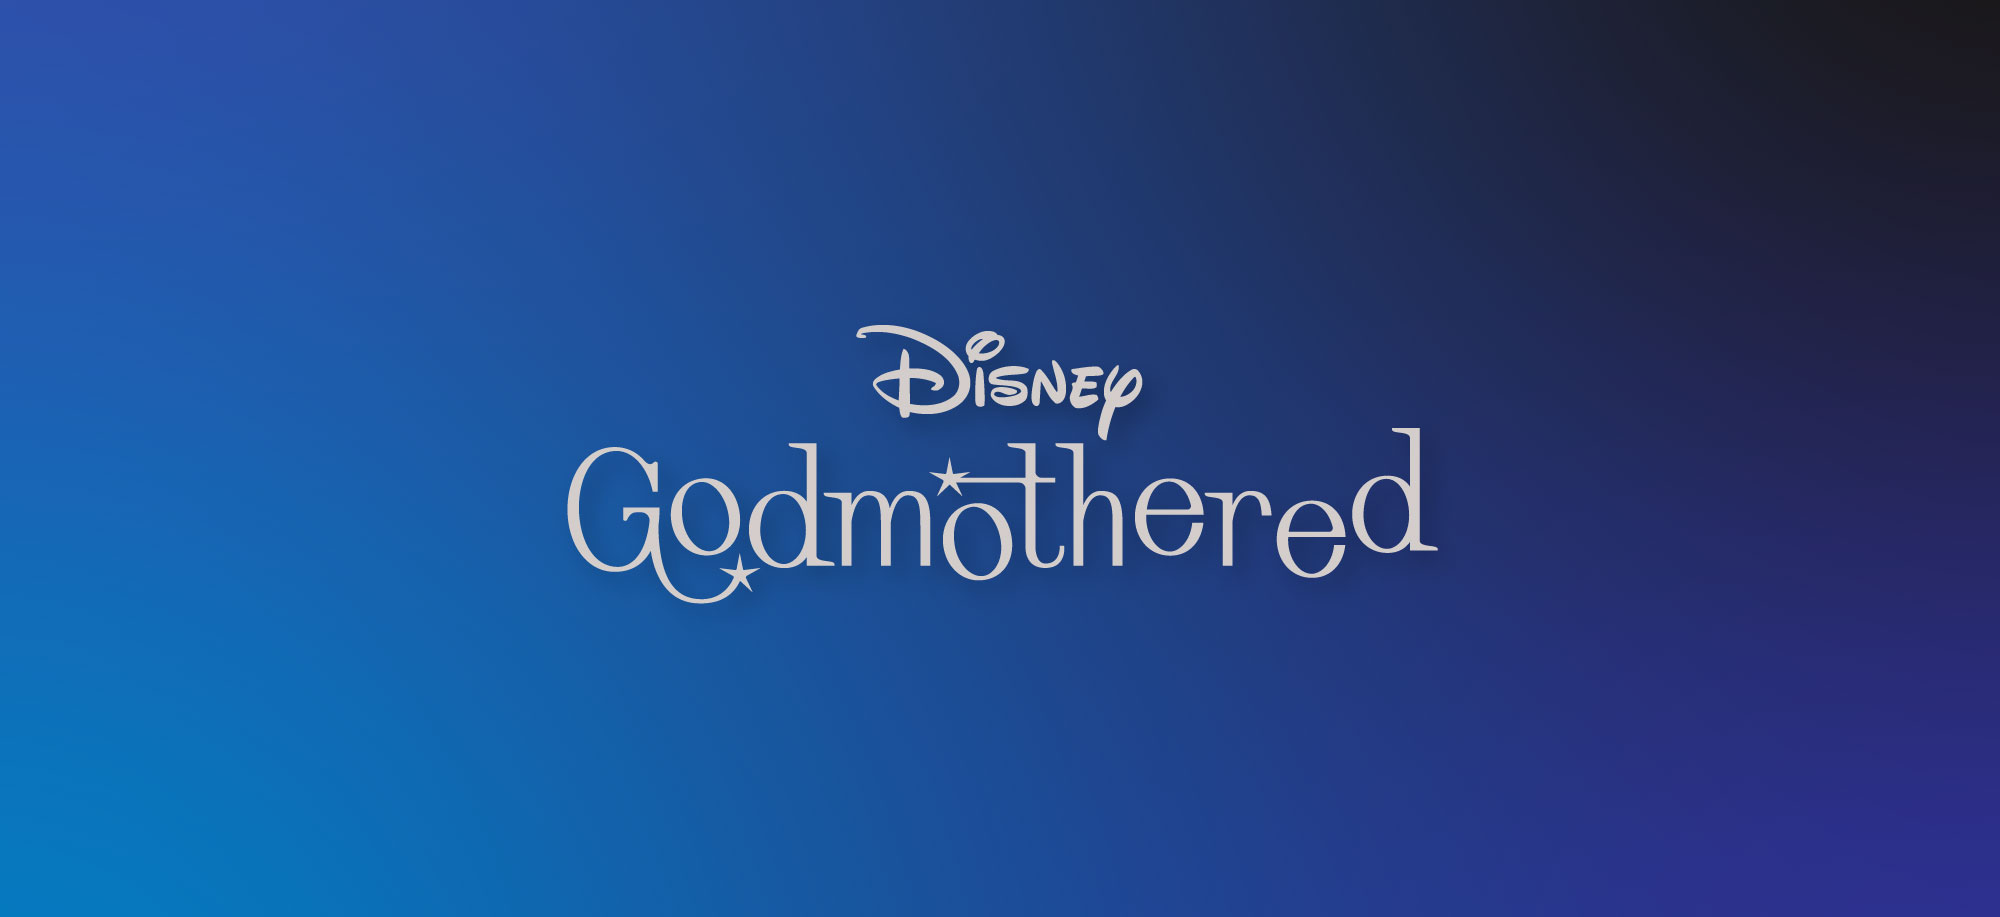 Godmothered Disney Title Treatments Hoodzpah featured